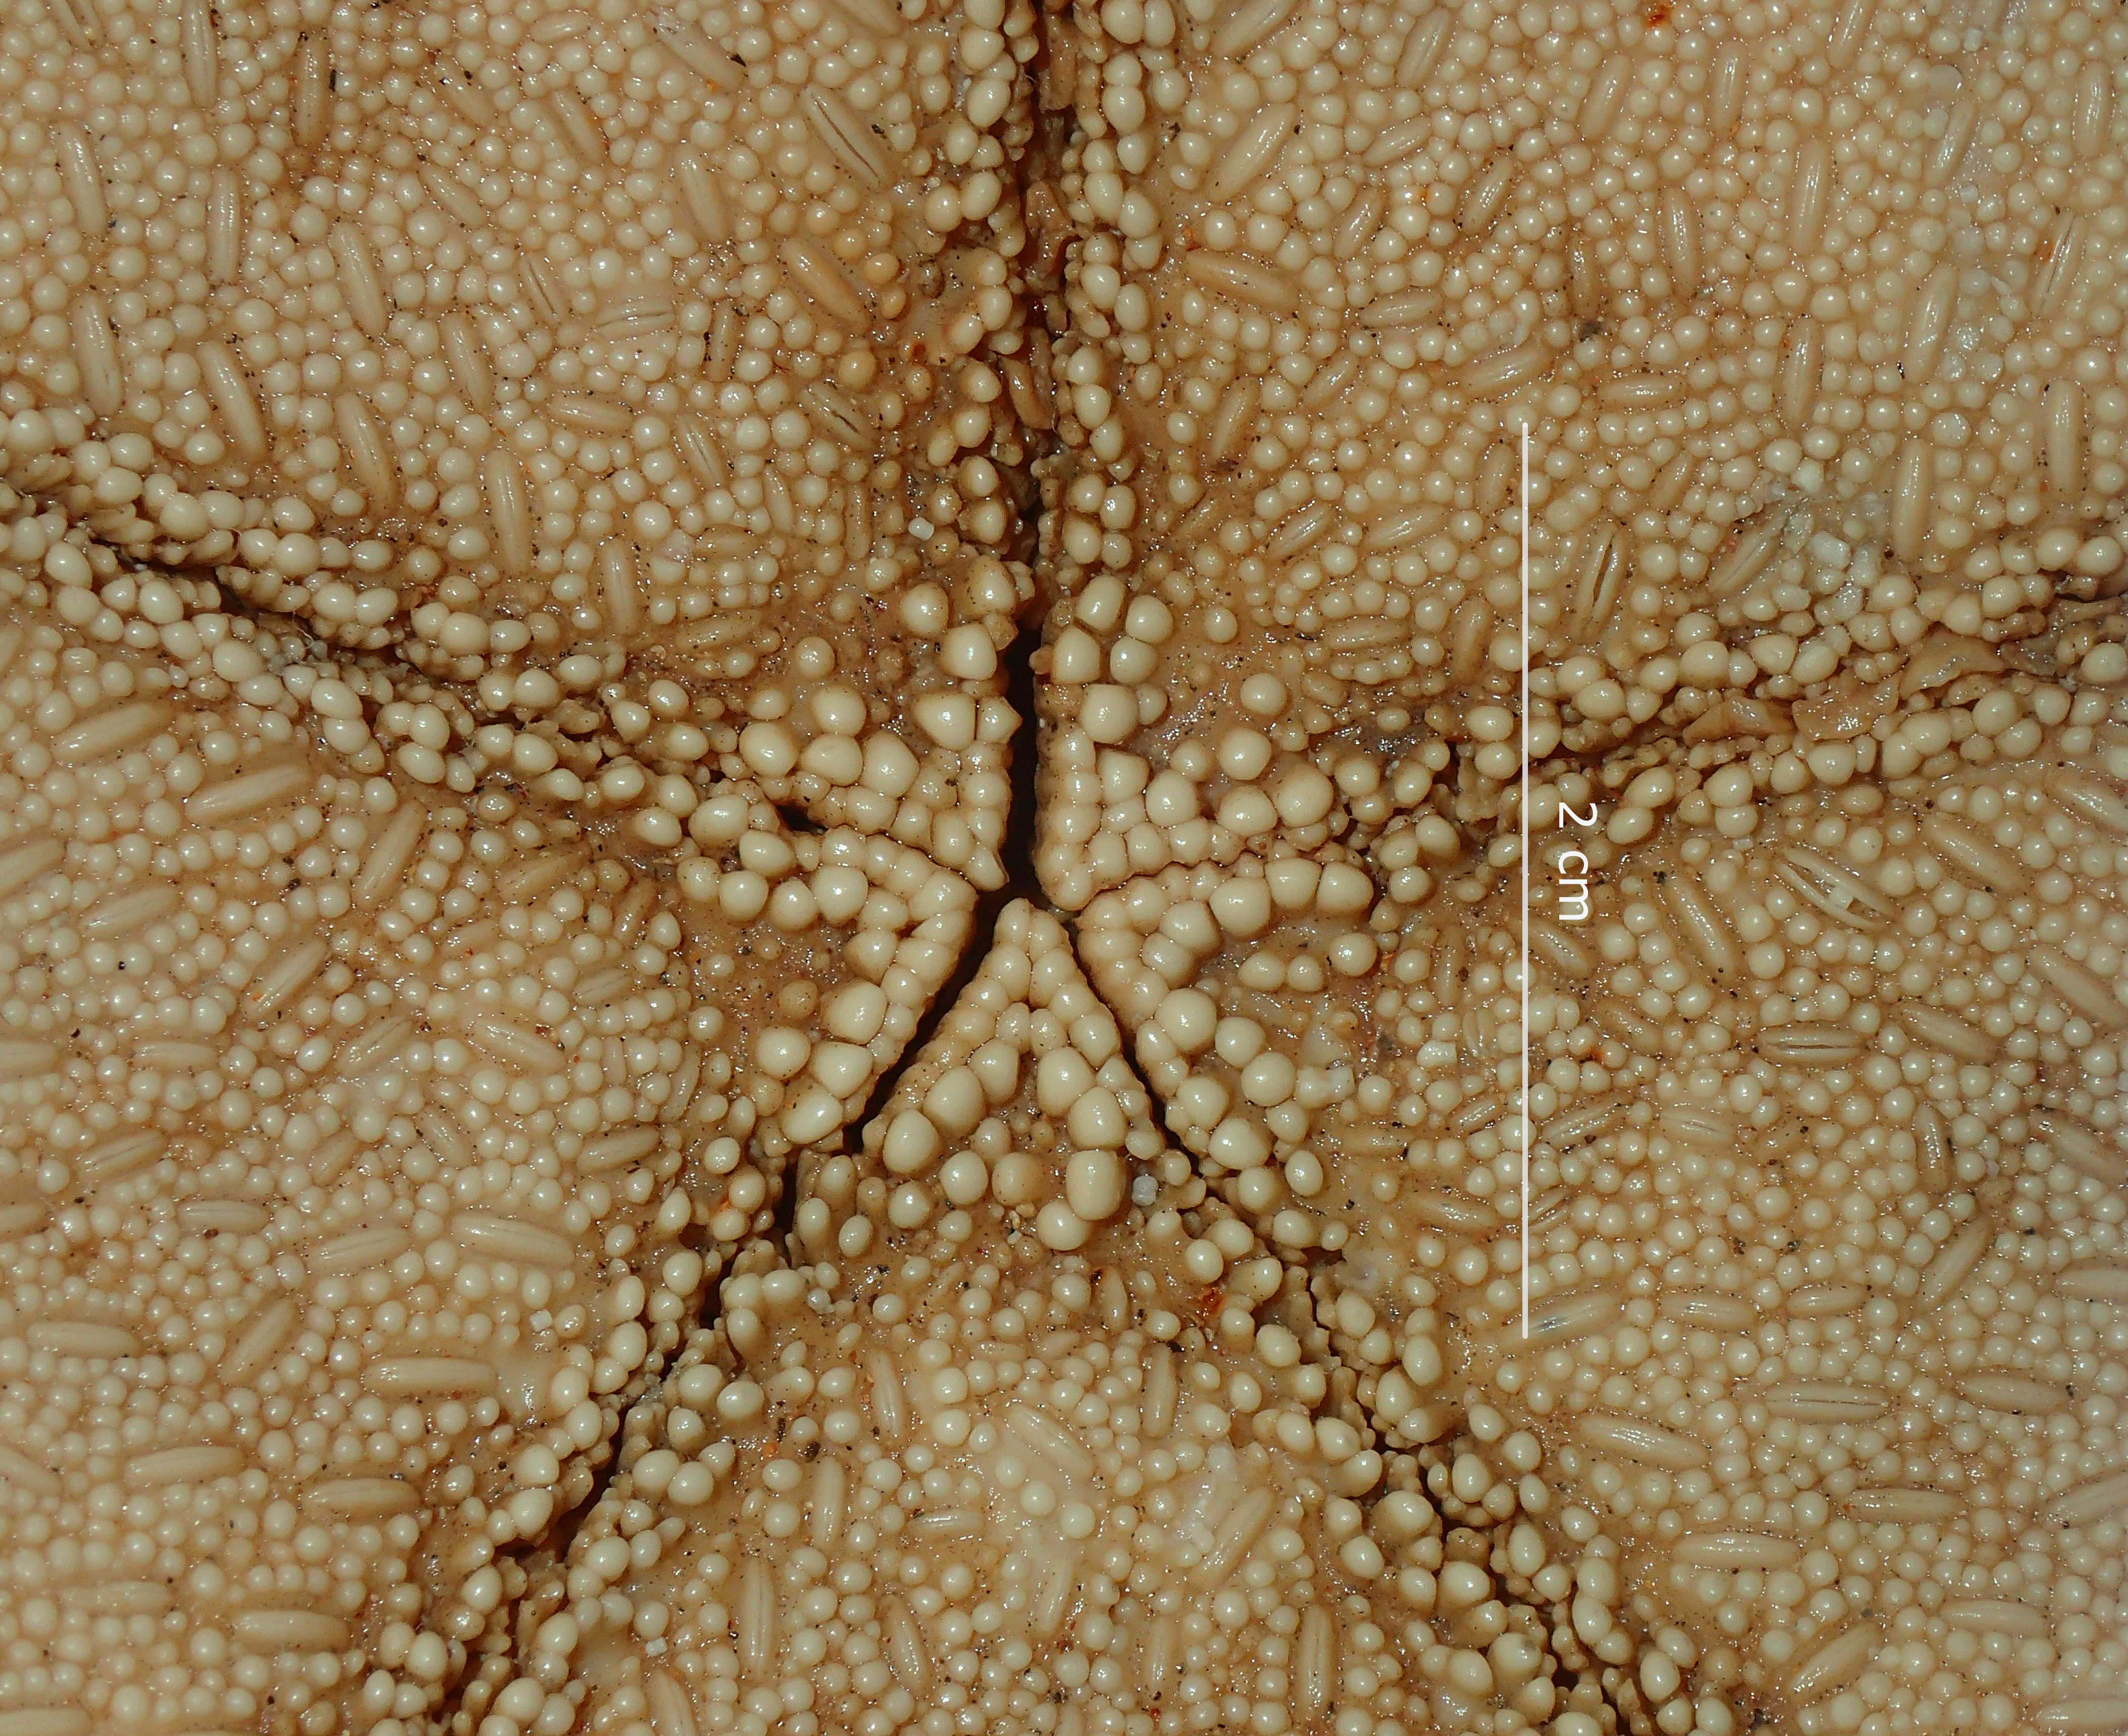 BE-RBINS-INV HOLOTYPE AST.442 Anthenea tuberculosa var. vanstraeleni ventral view, center.jpg